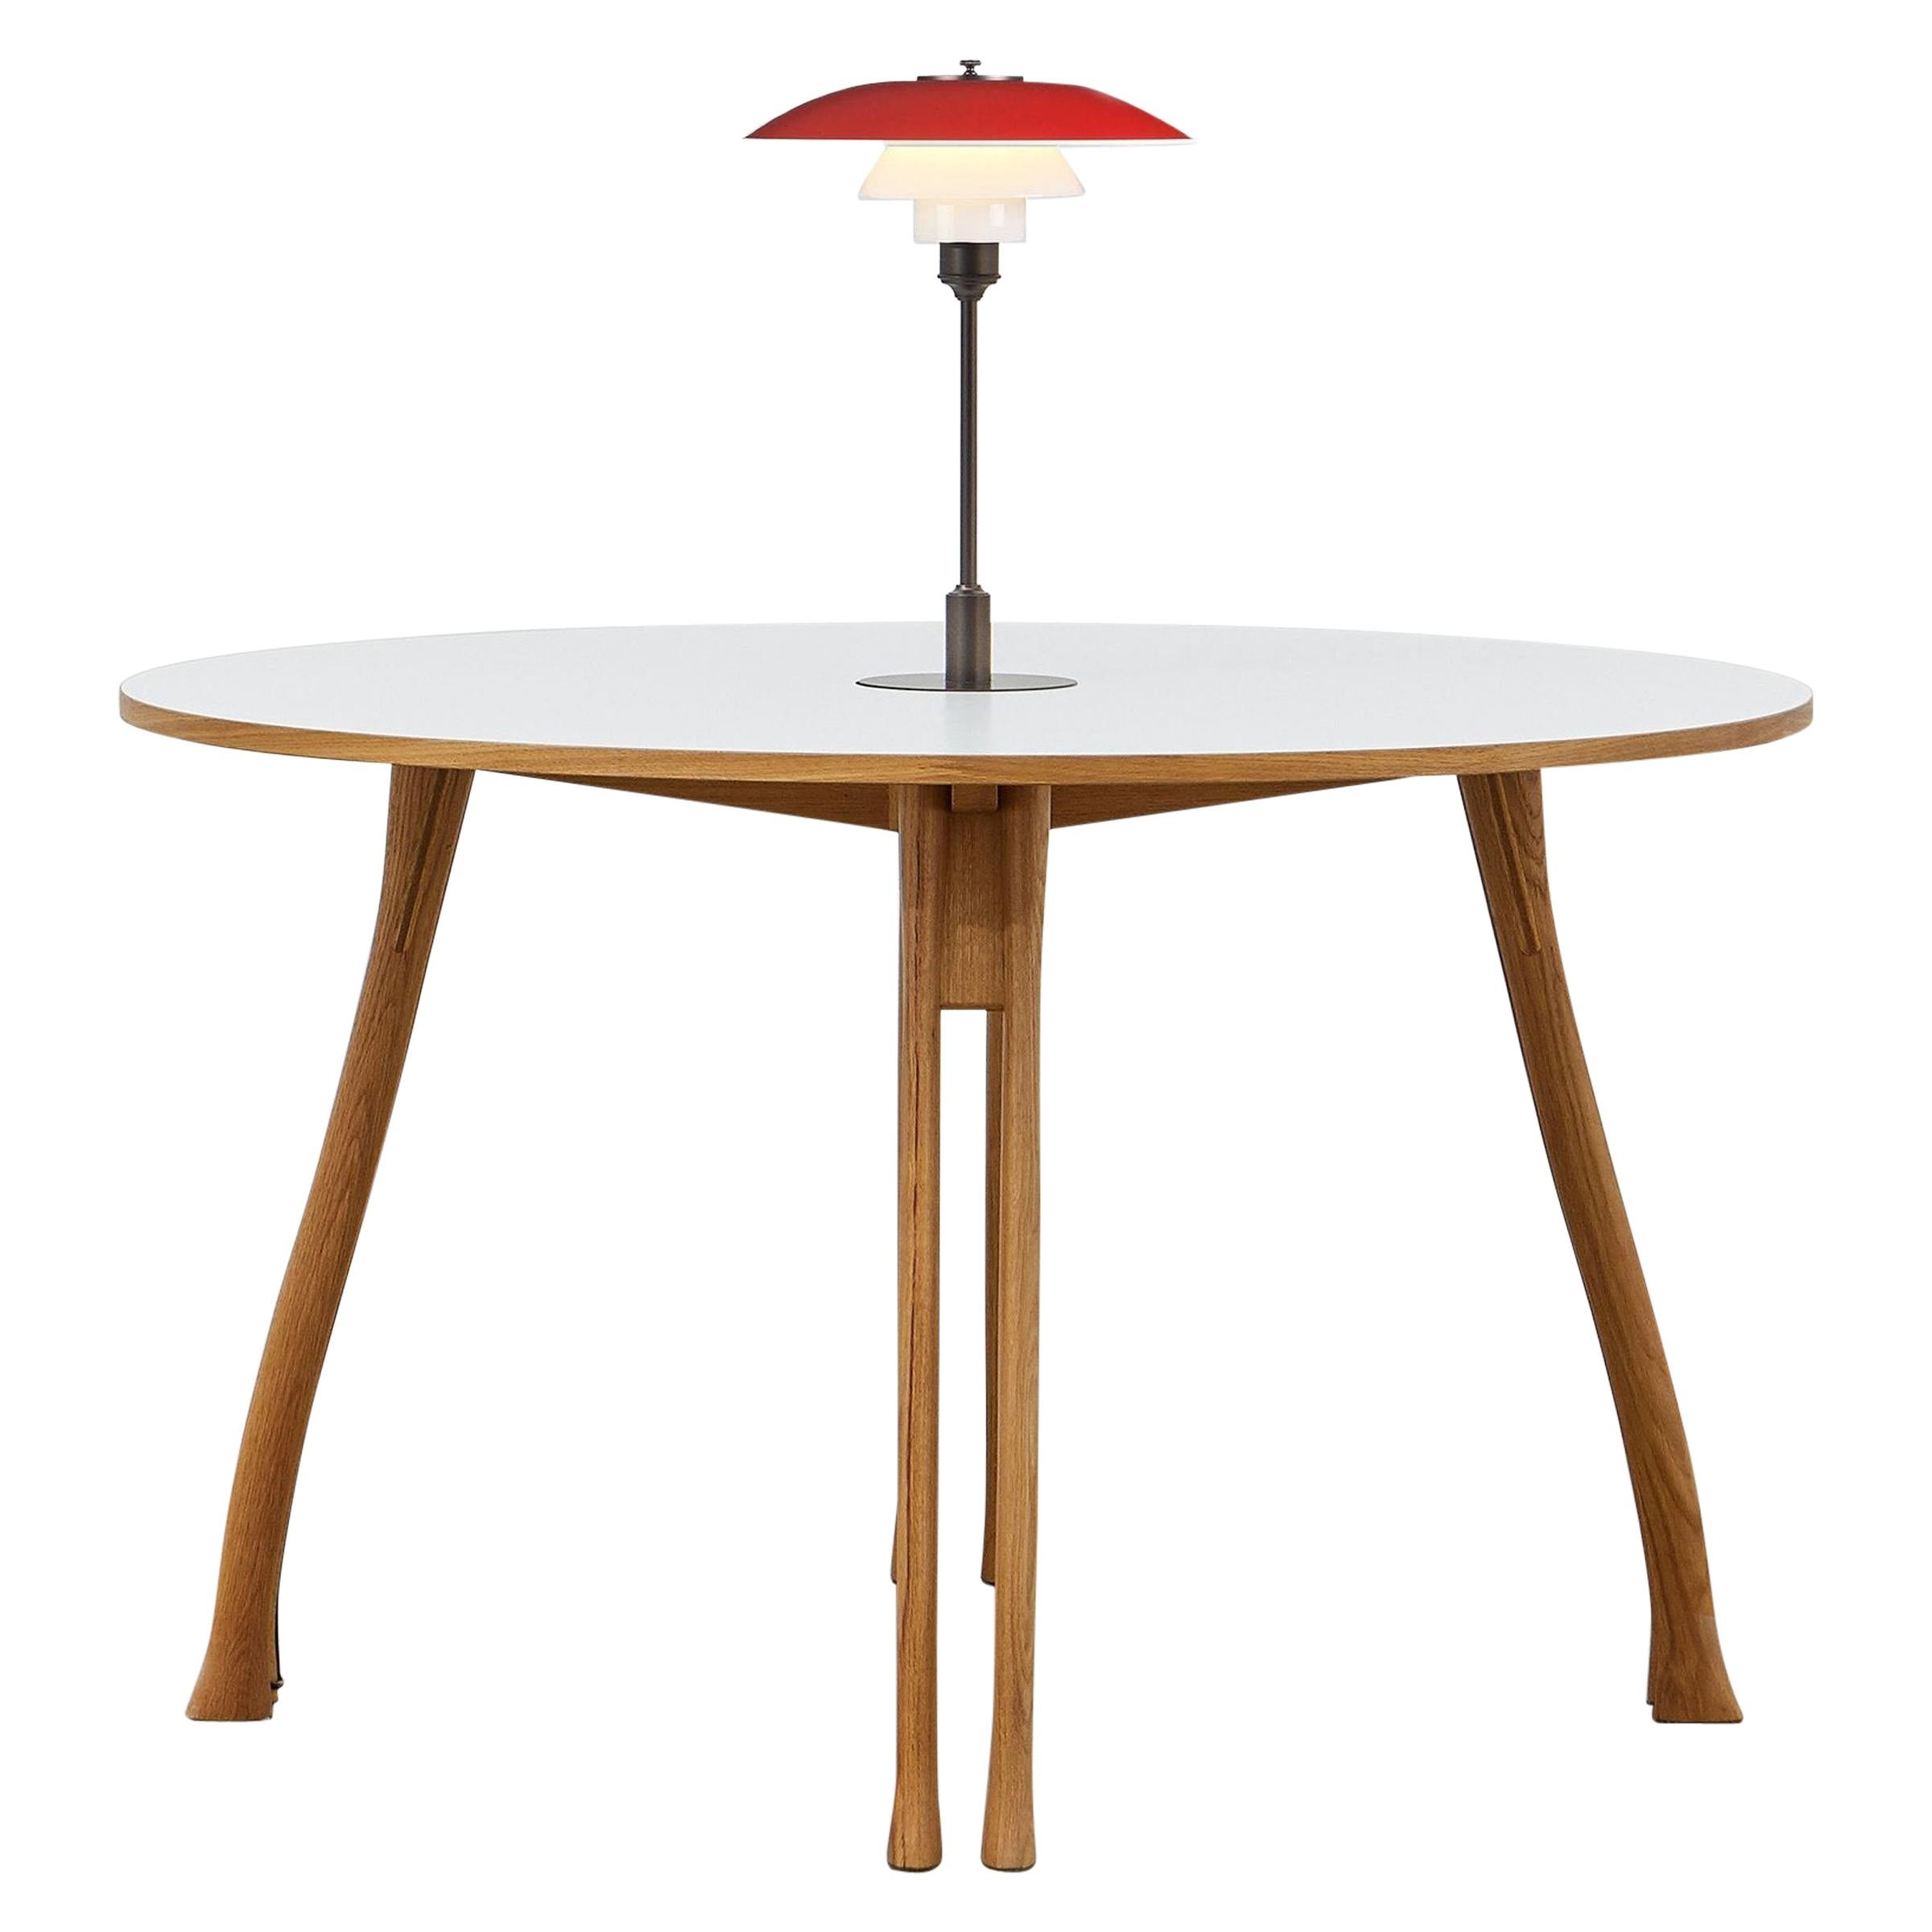 PH Axe Table, Natural Oak Legs, Laminated Plate, Red PH 3 ½ - 2 ½ Lamp